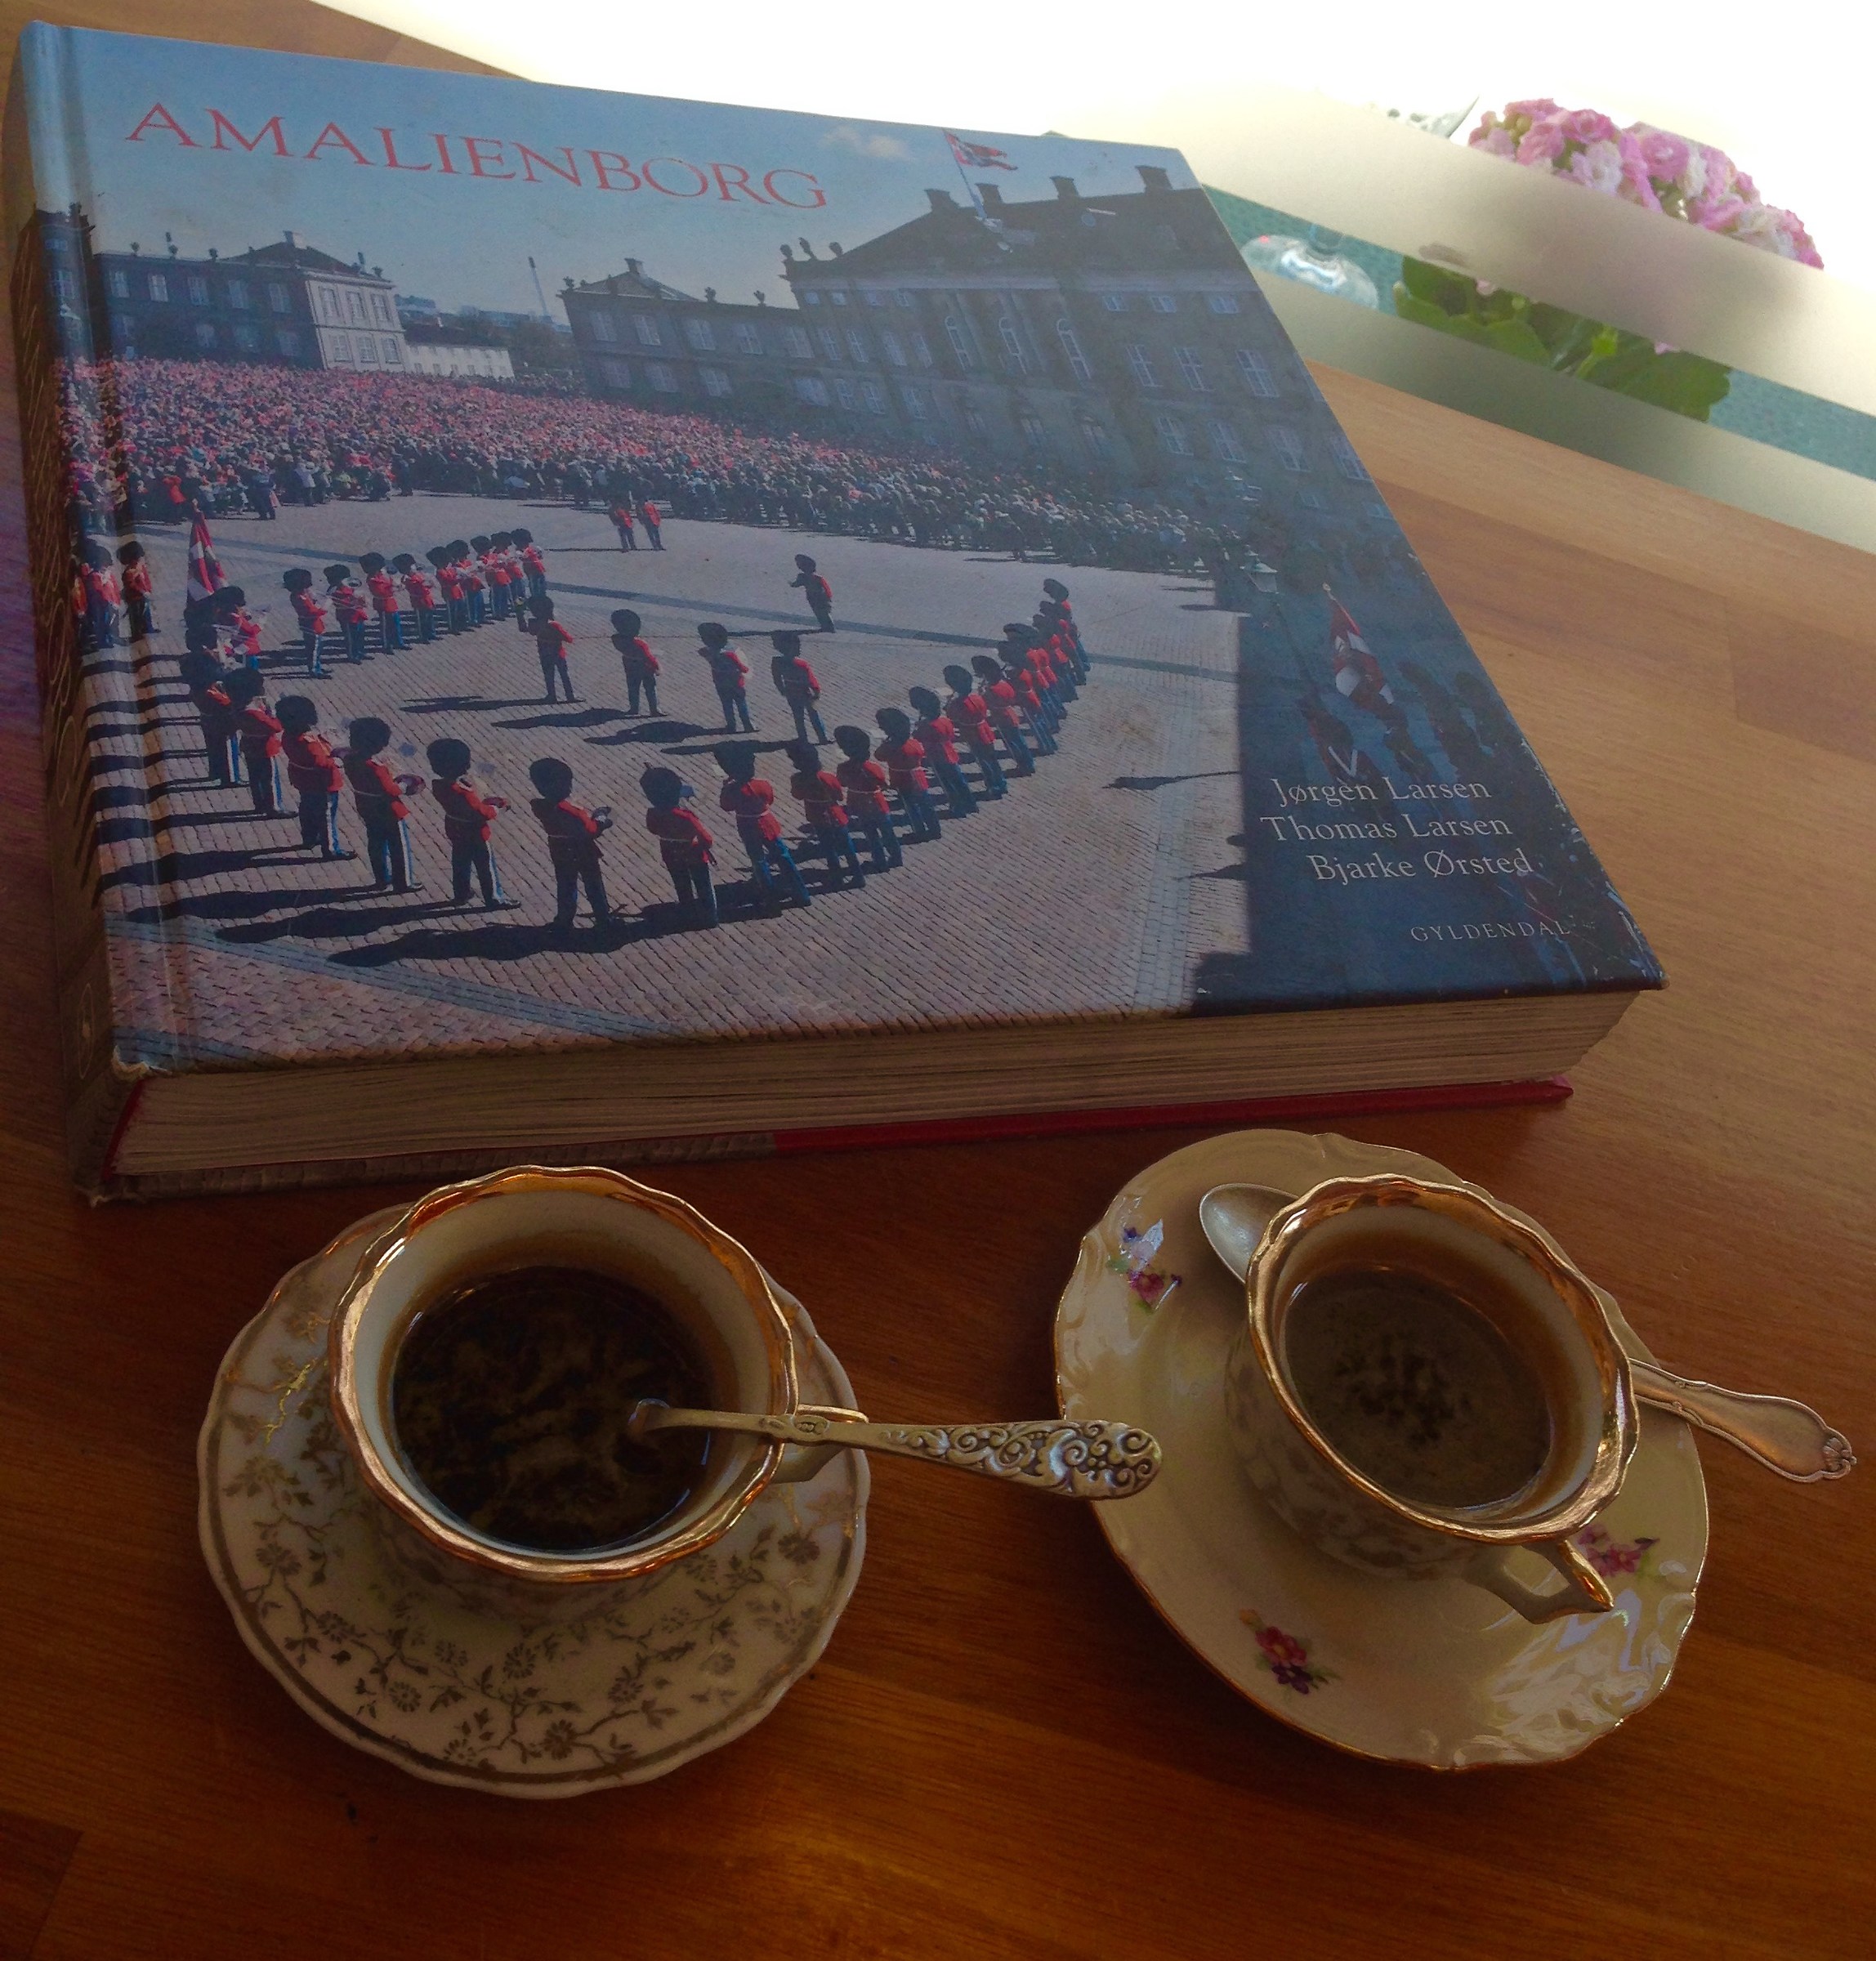 A coffee with Her Majesty...